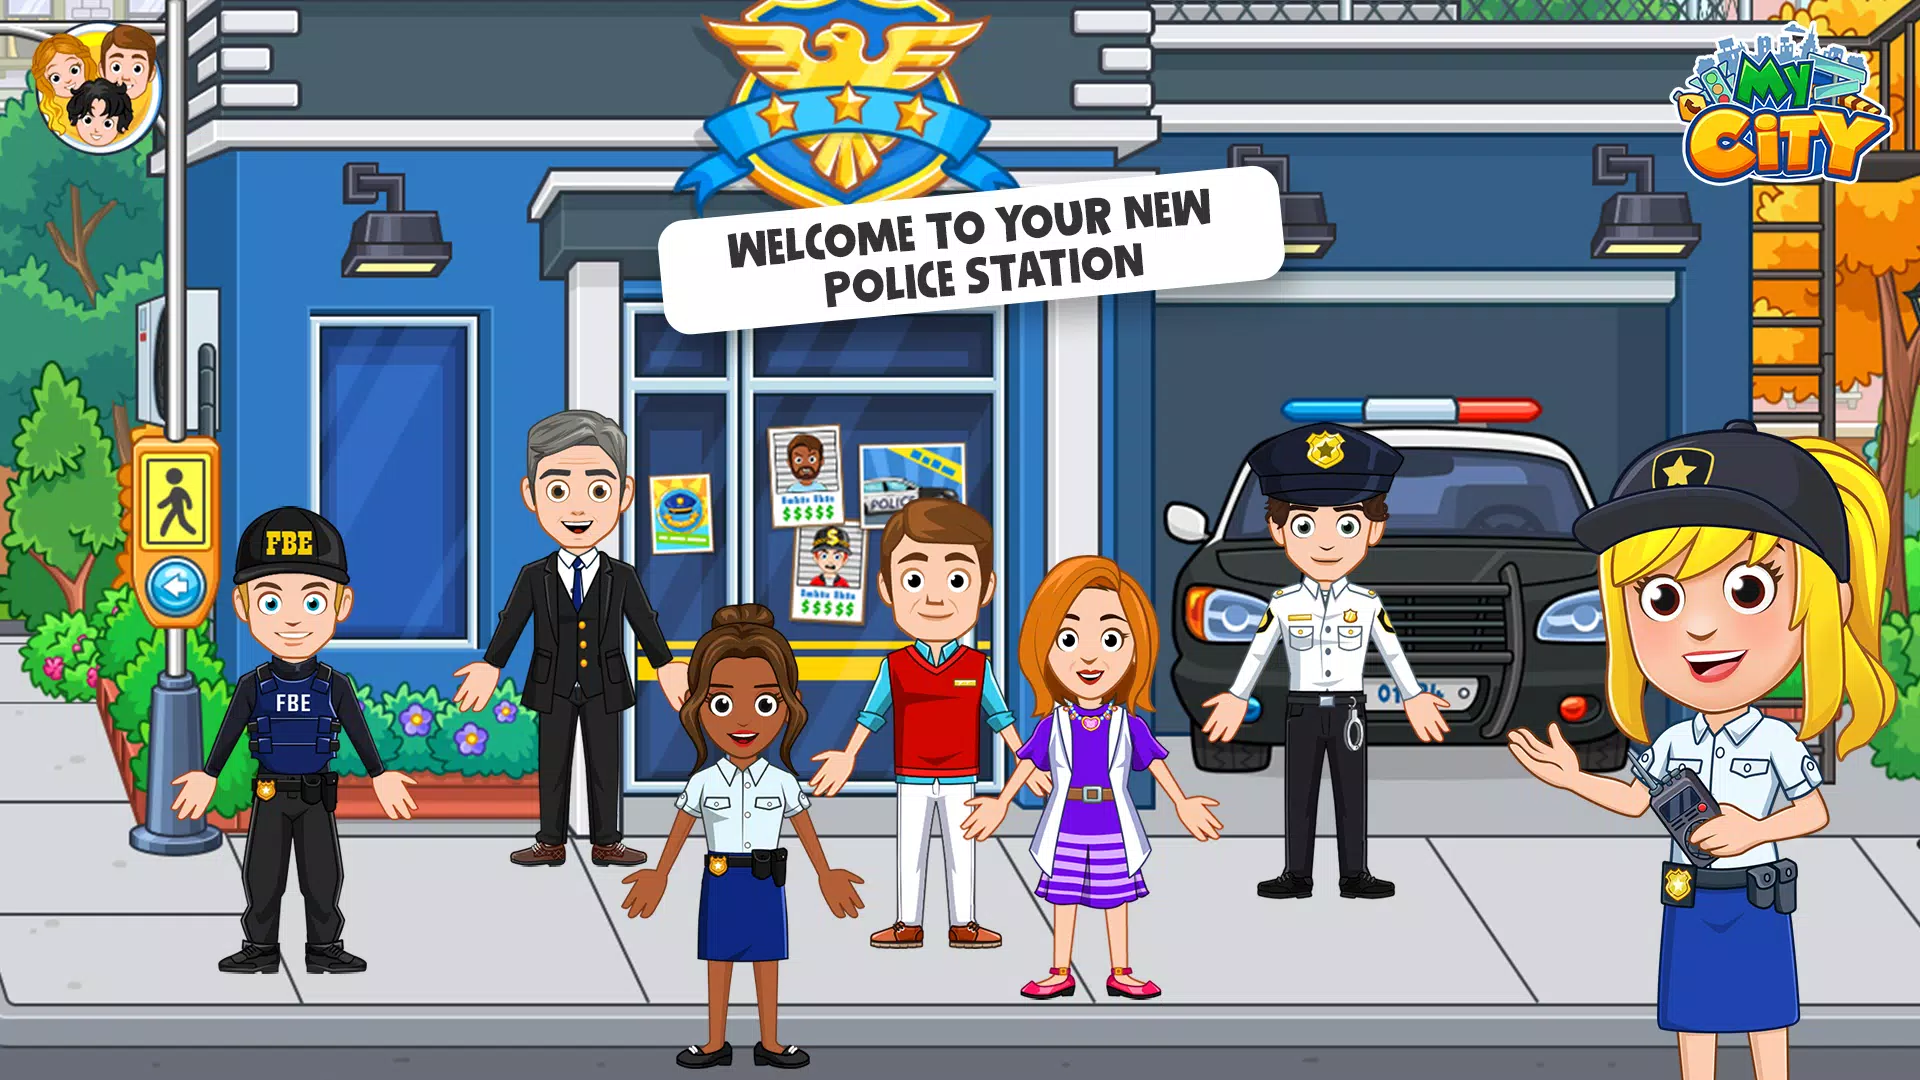 My Town World - Mega Kids Game para Android - Download